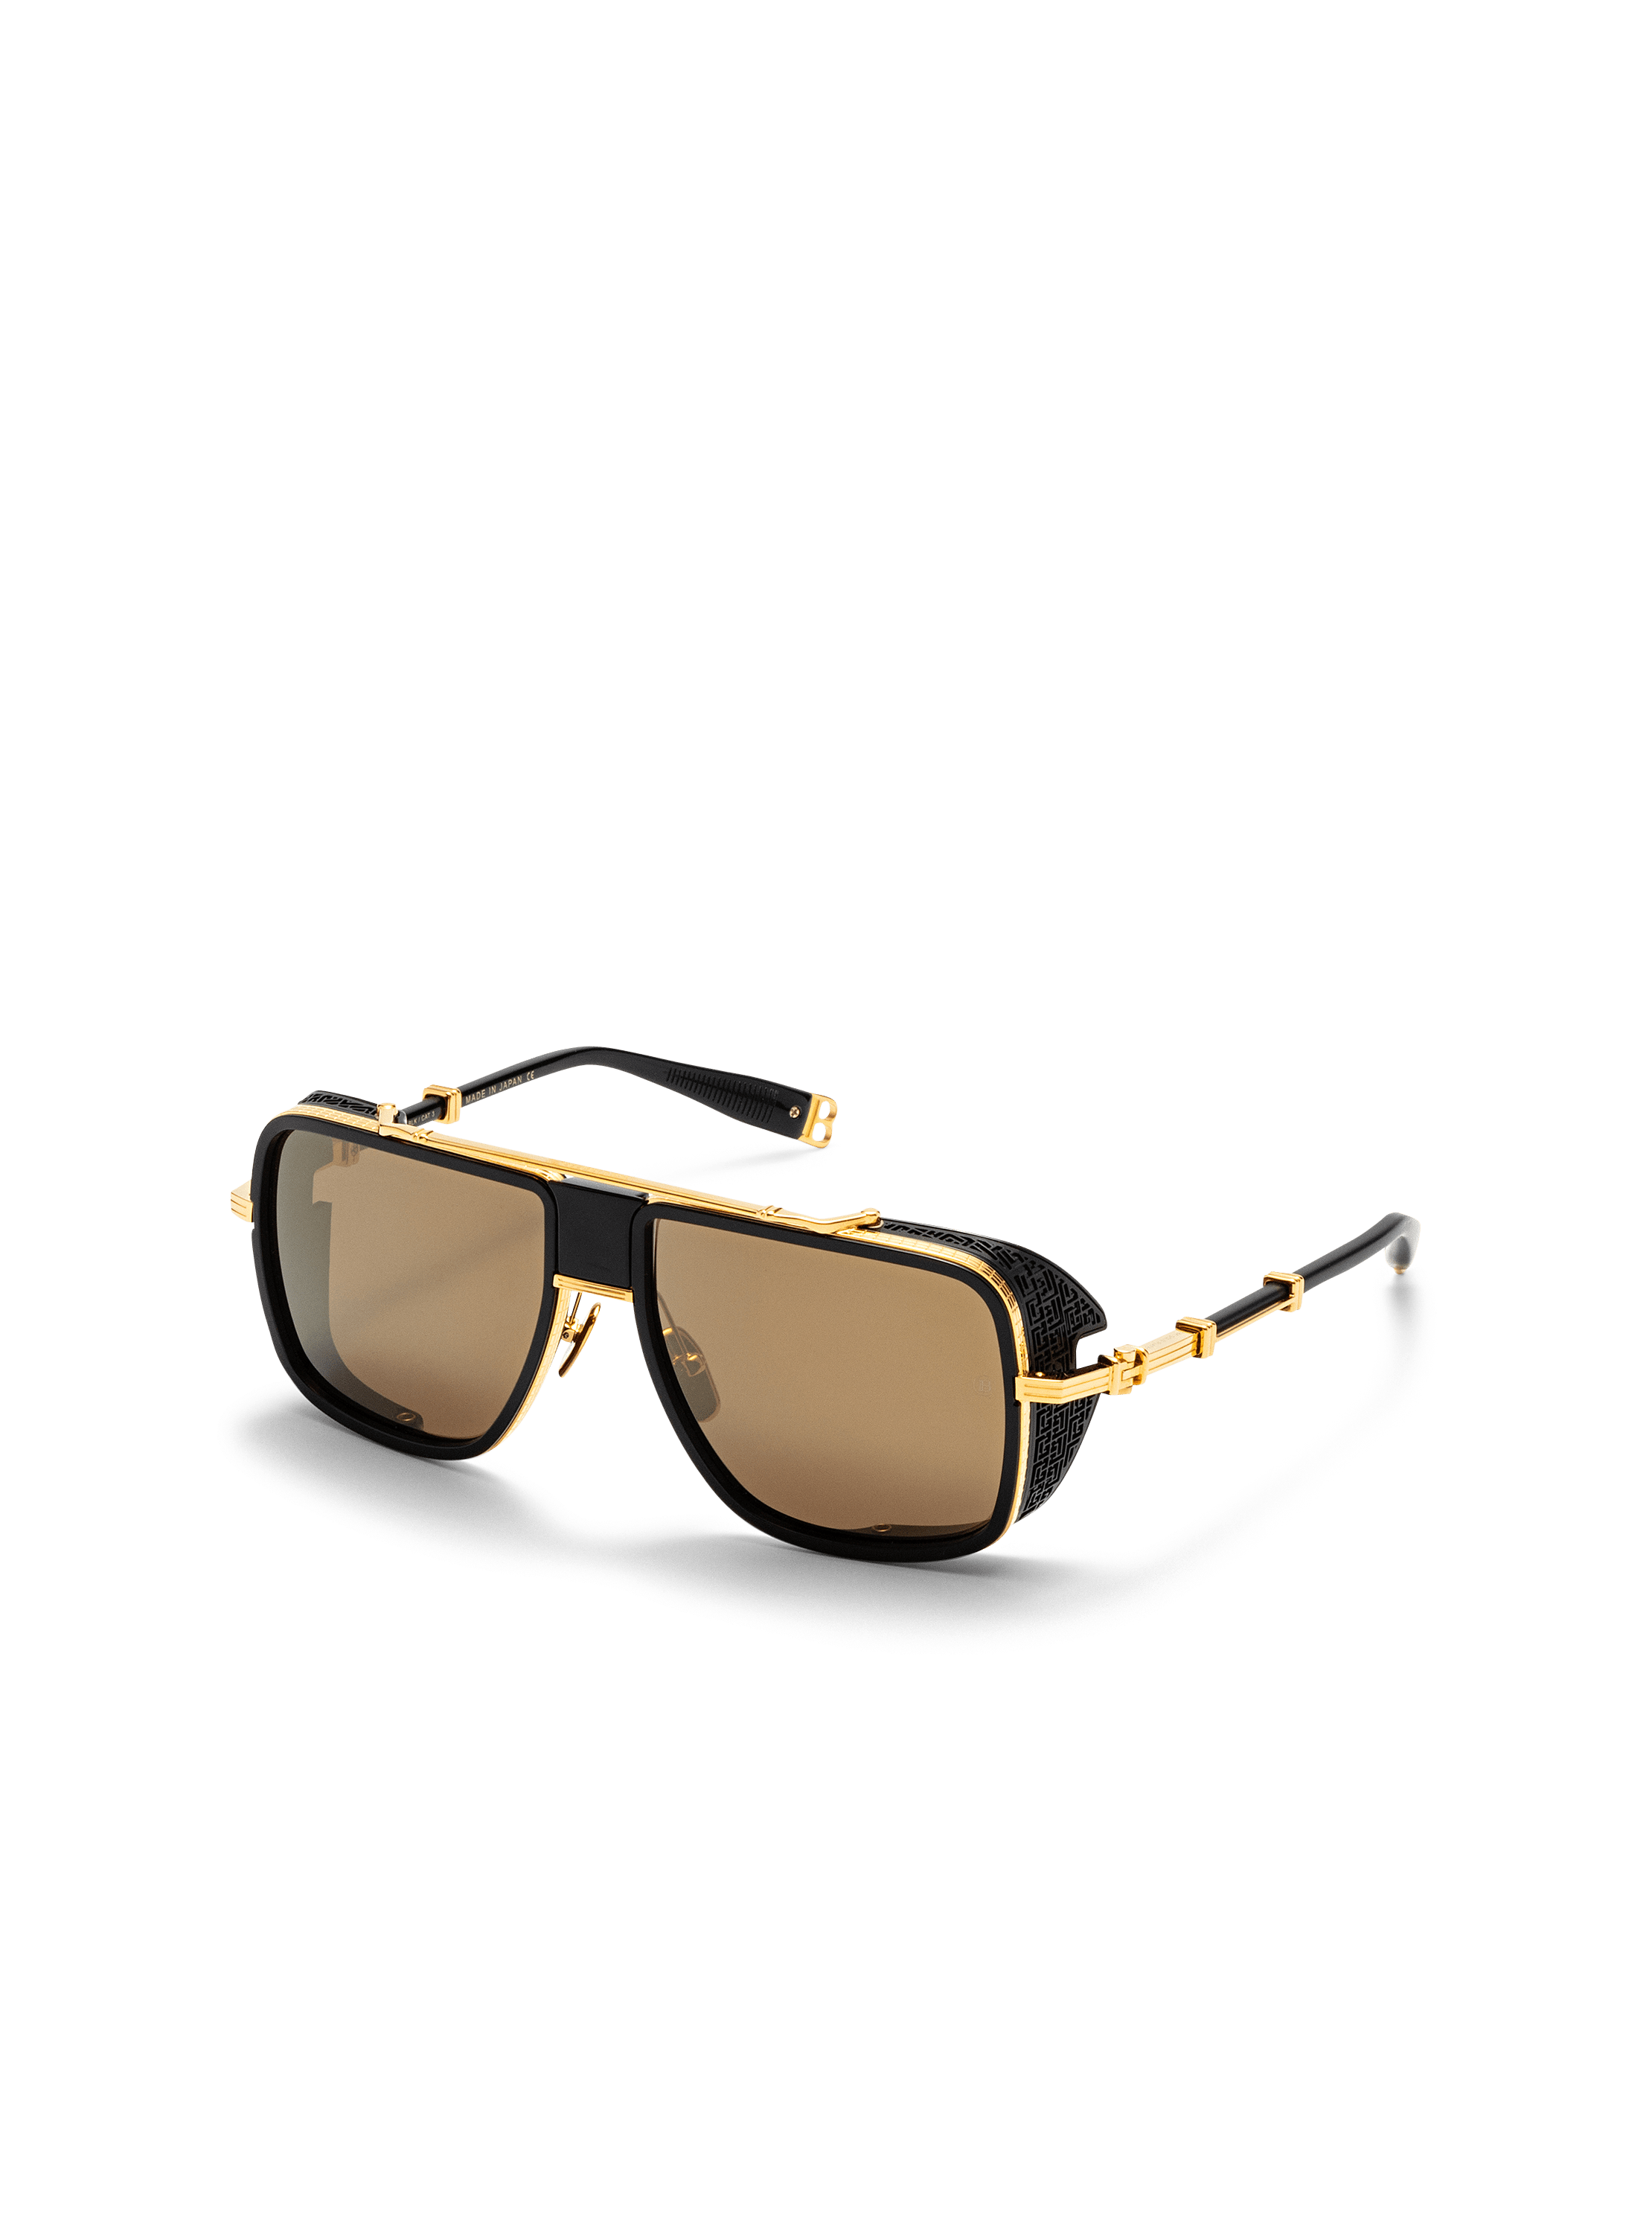 O.R. Sonnenbrille